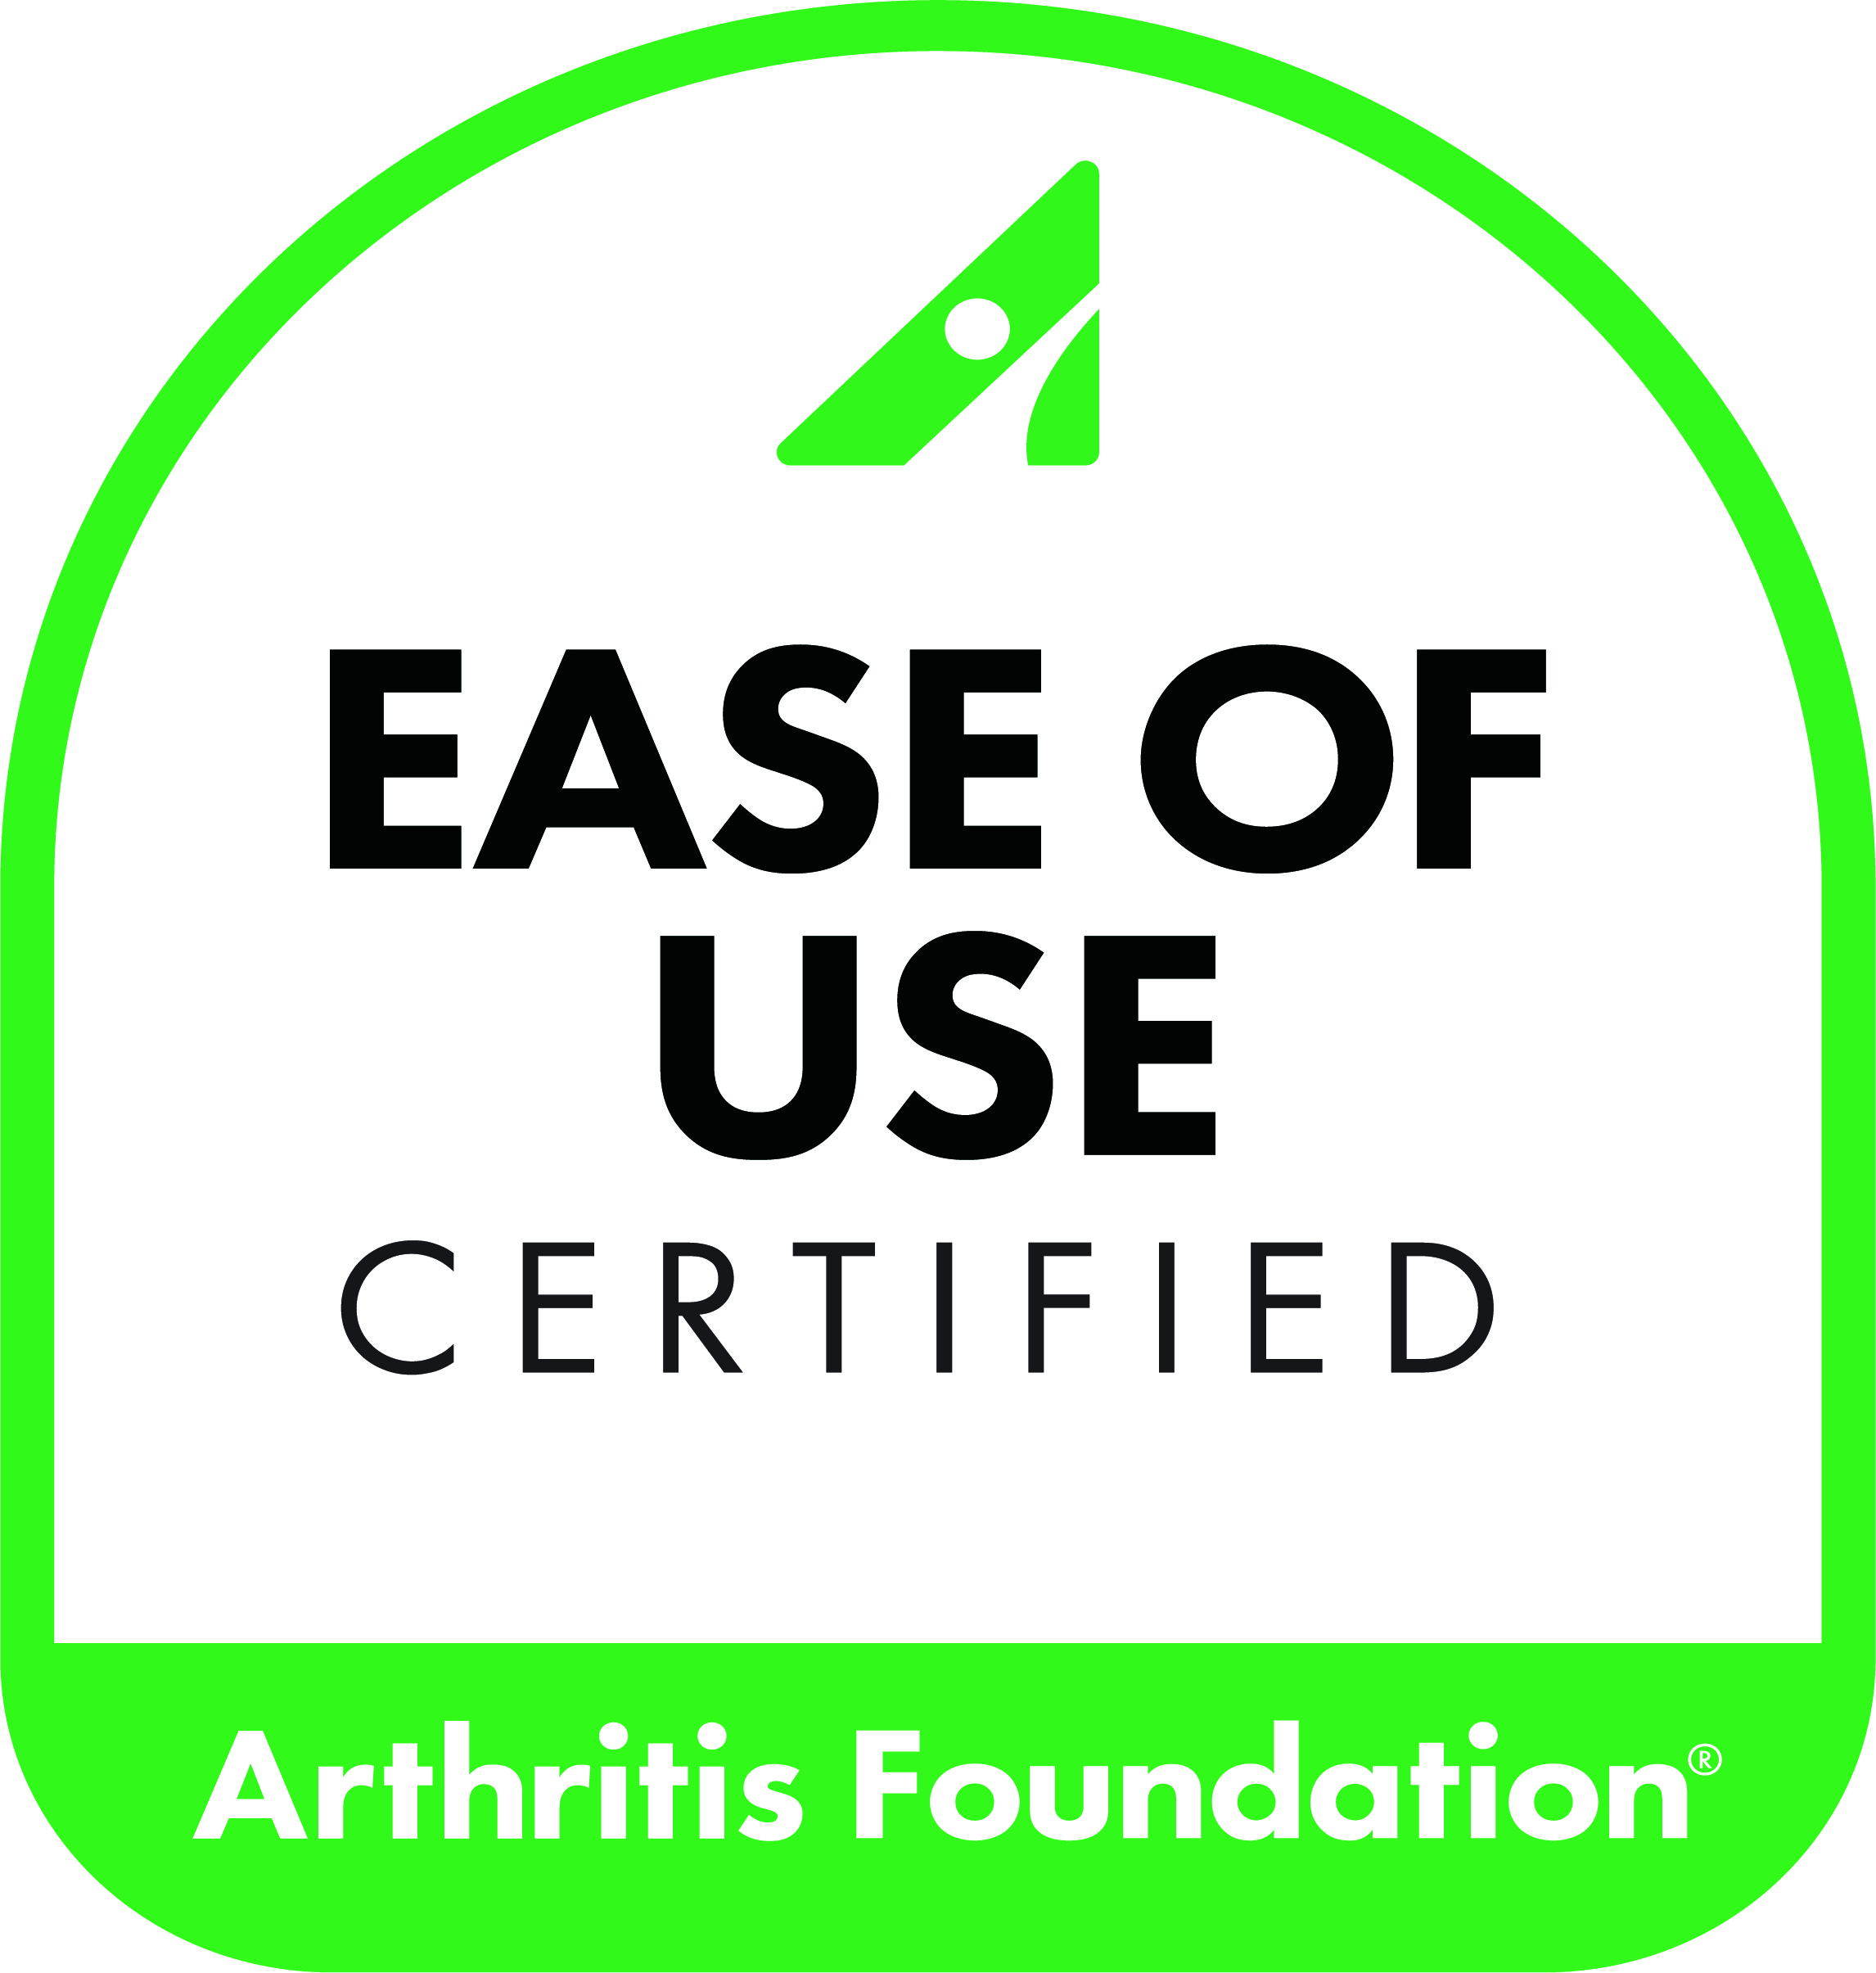 Arthritis Foundation Ease of Use logo